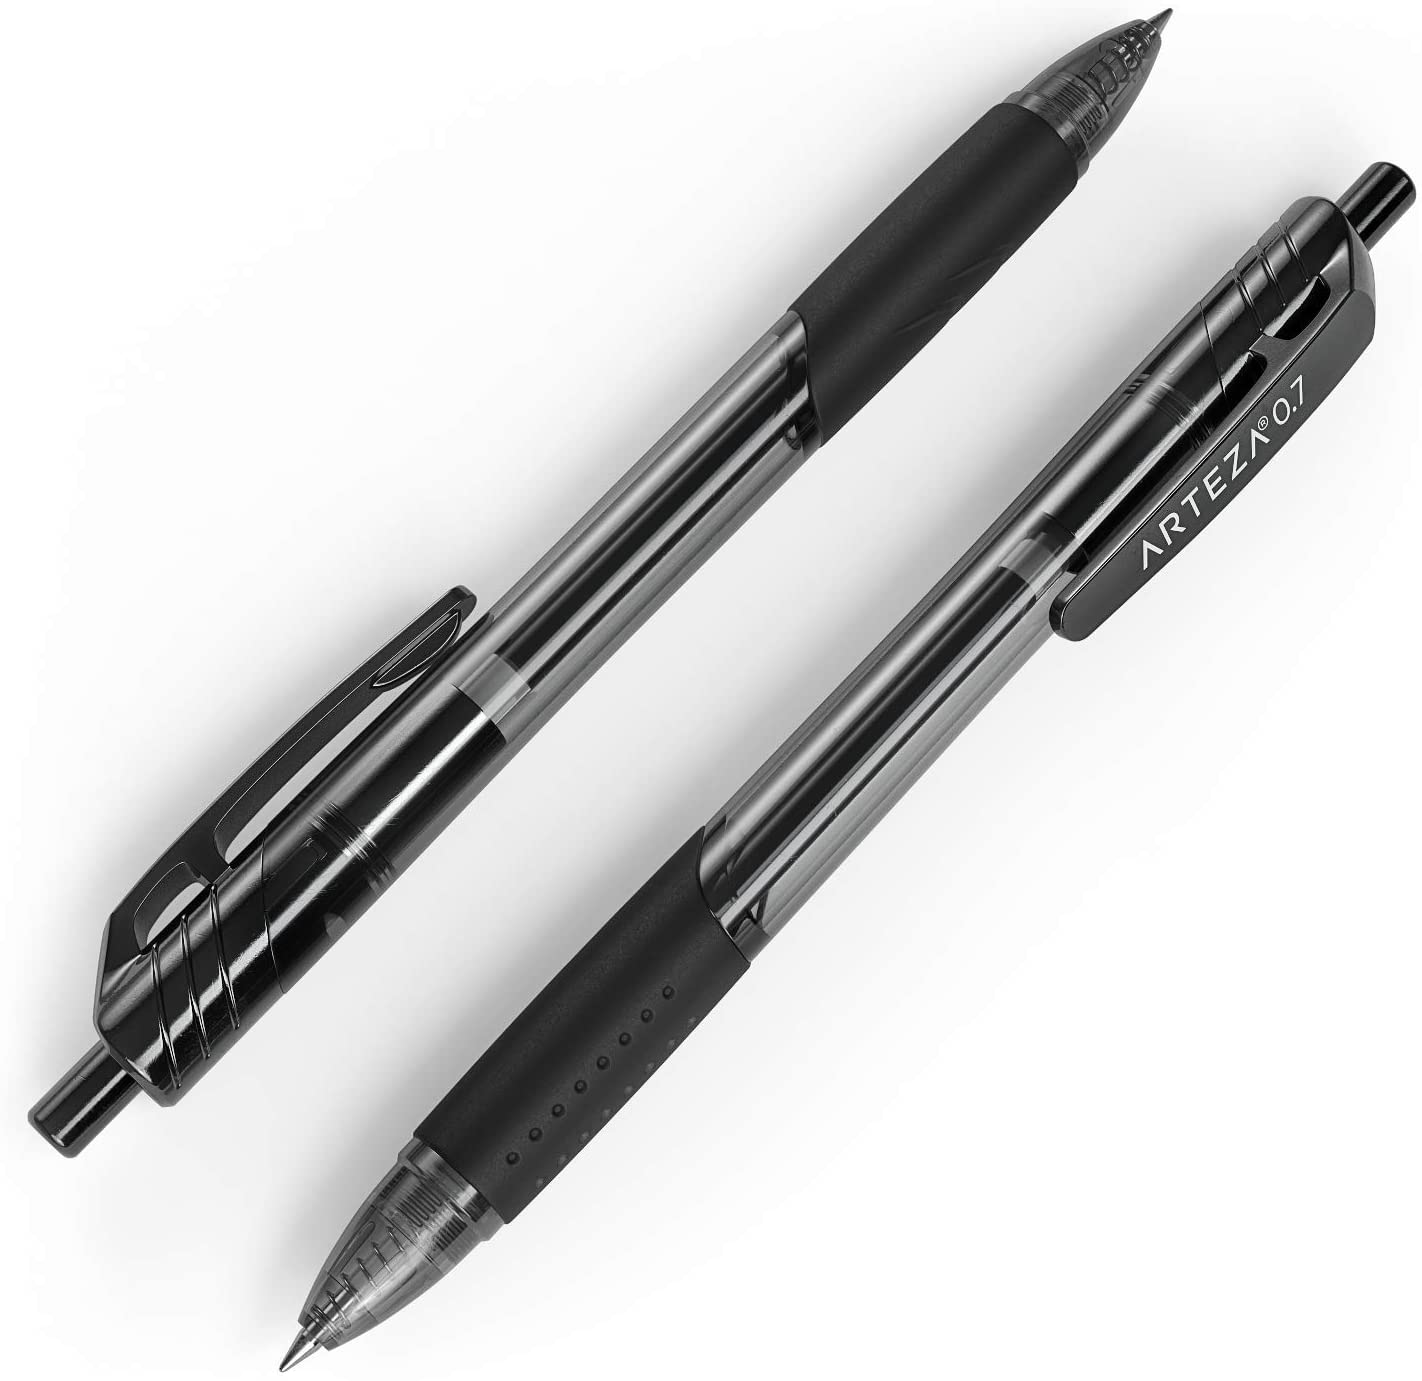 Retractable Gel Ink Pens, Black - Set of 24